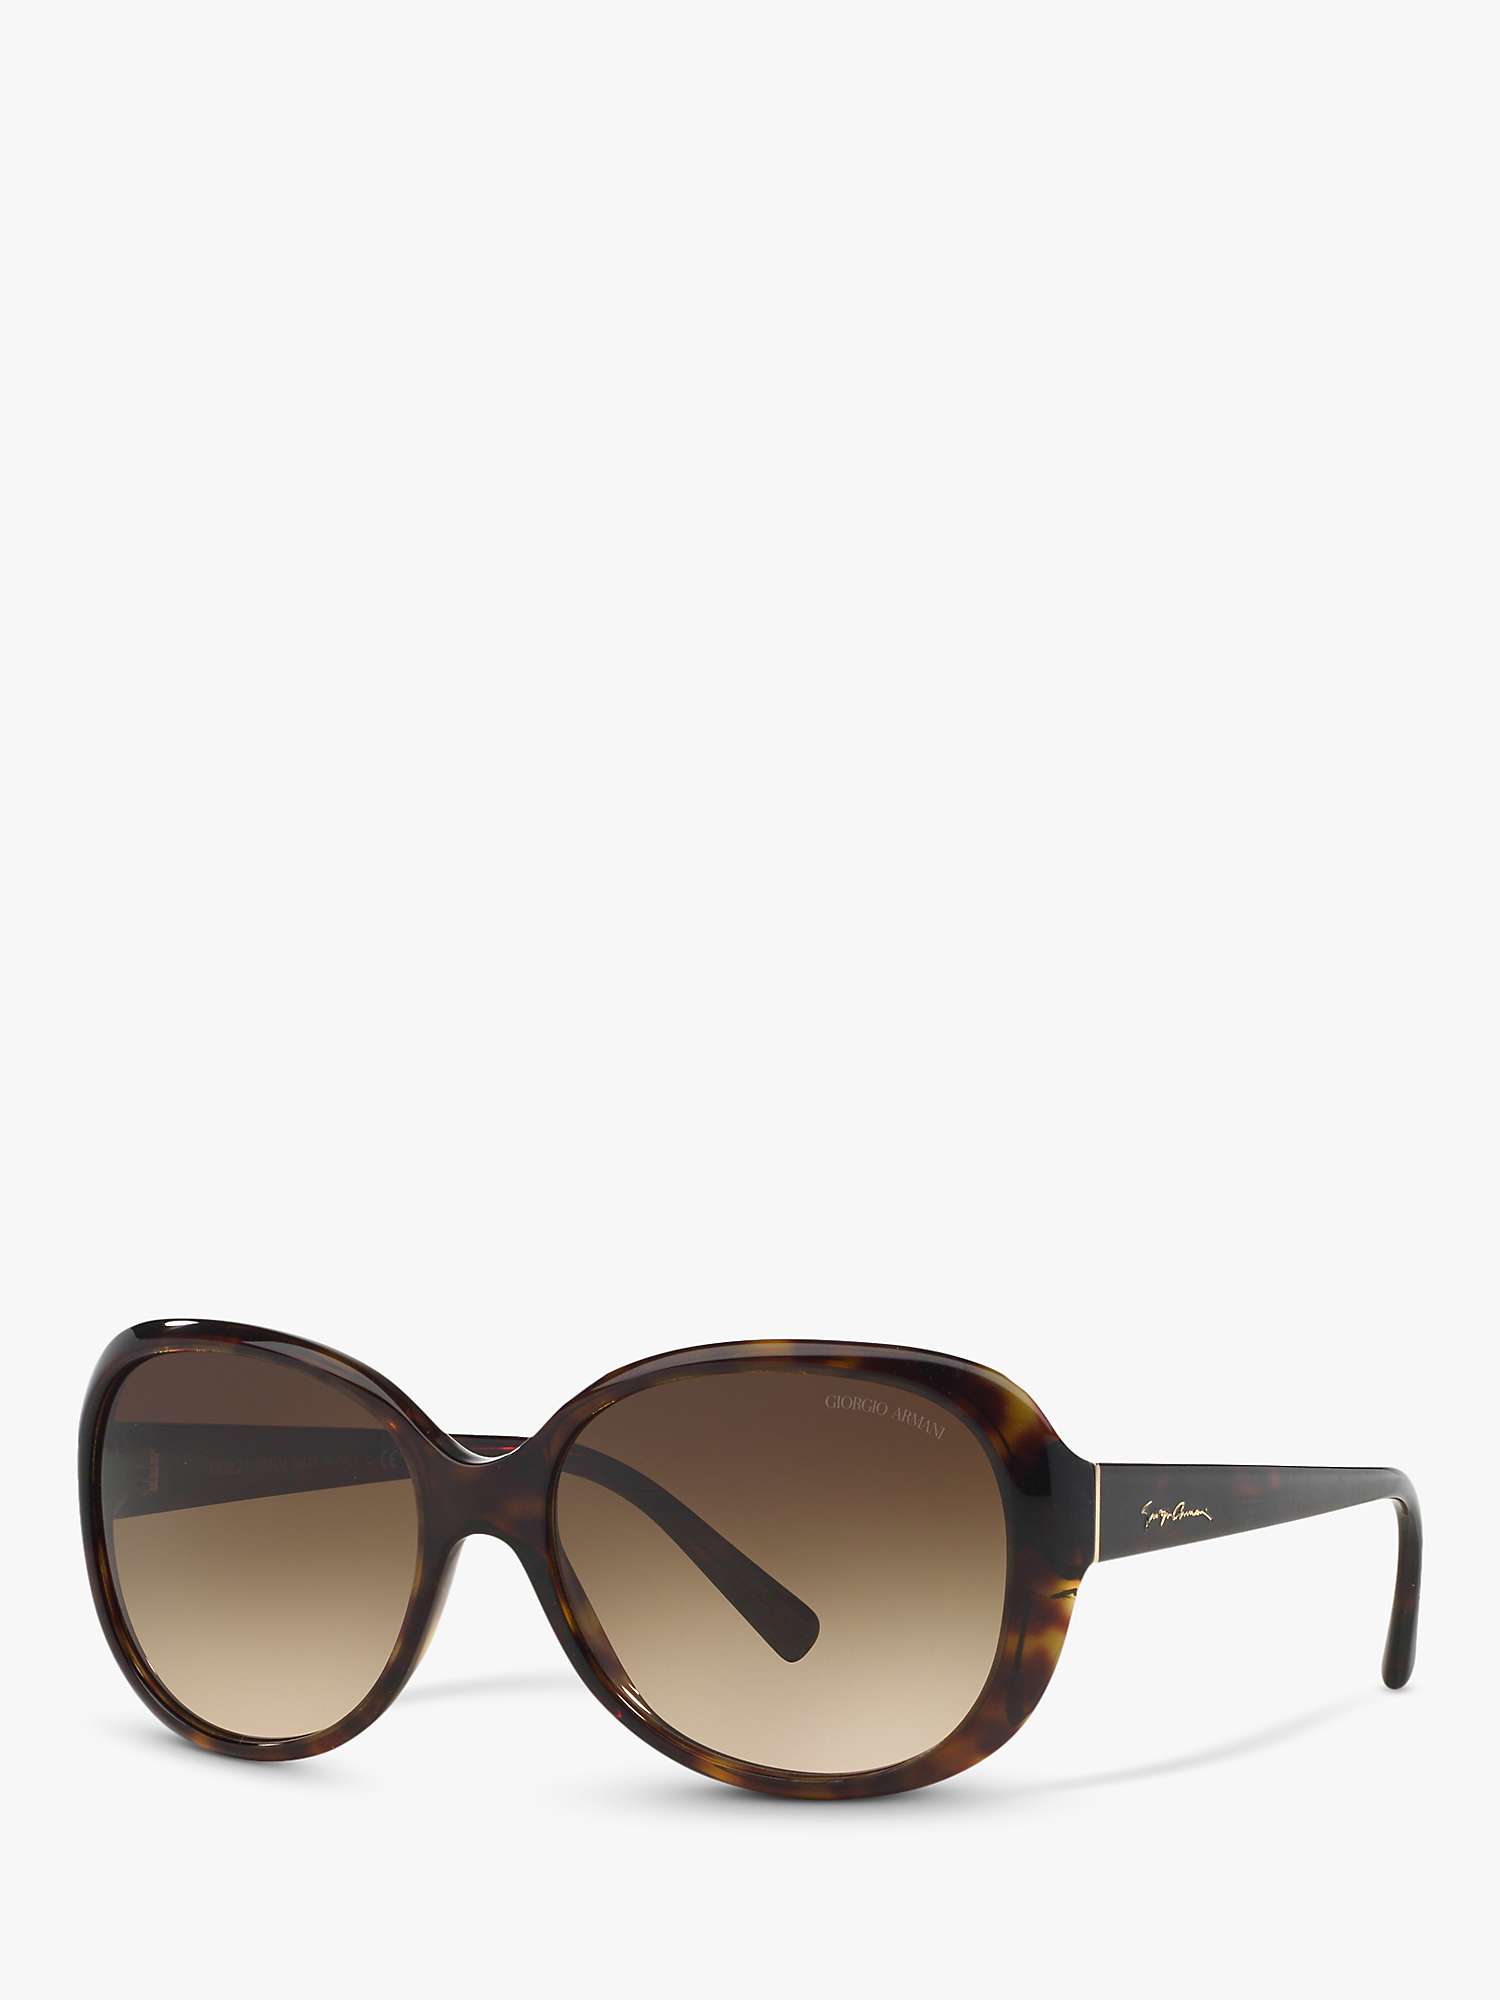 Buy Giorgio Armani AR8047 Women's Round Sunglasses, Havana/Brown Gradient Online at johnlewis.com